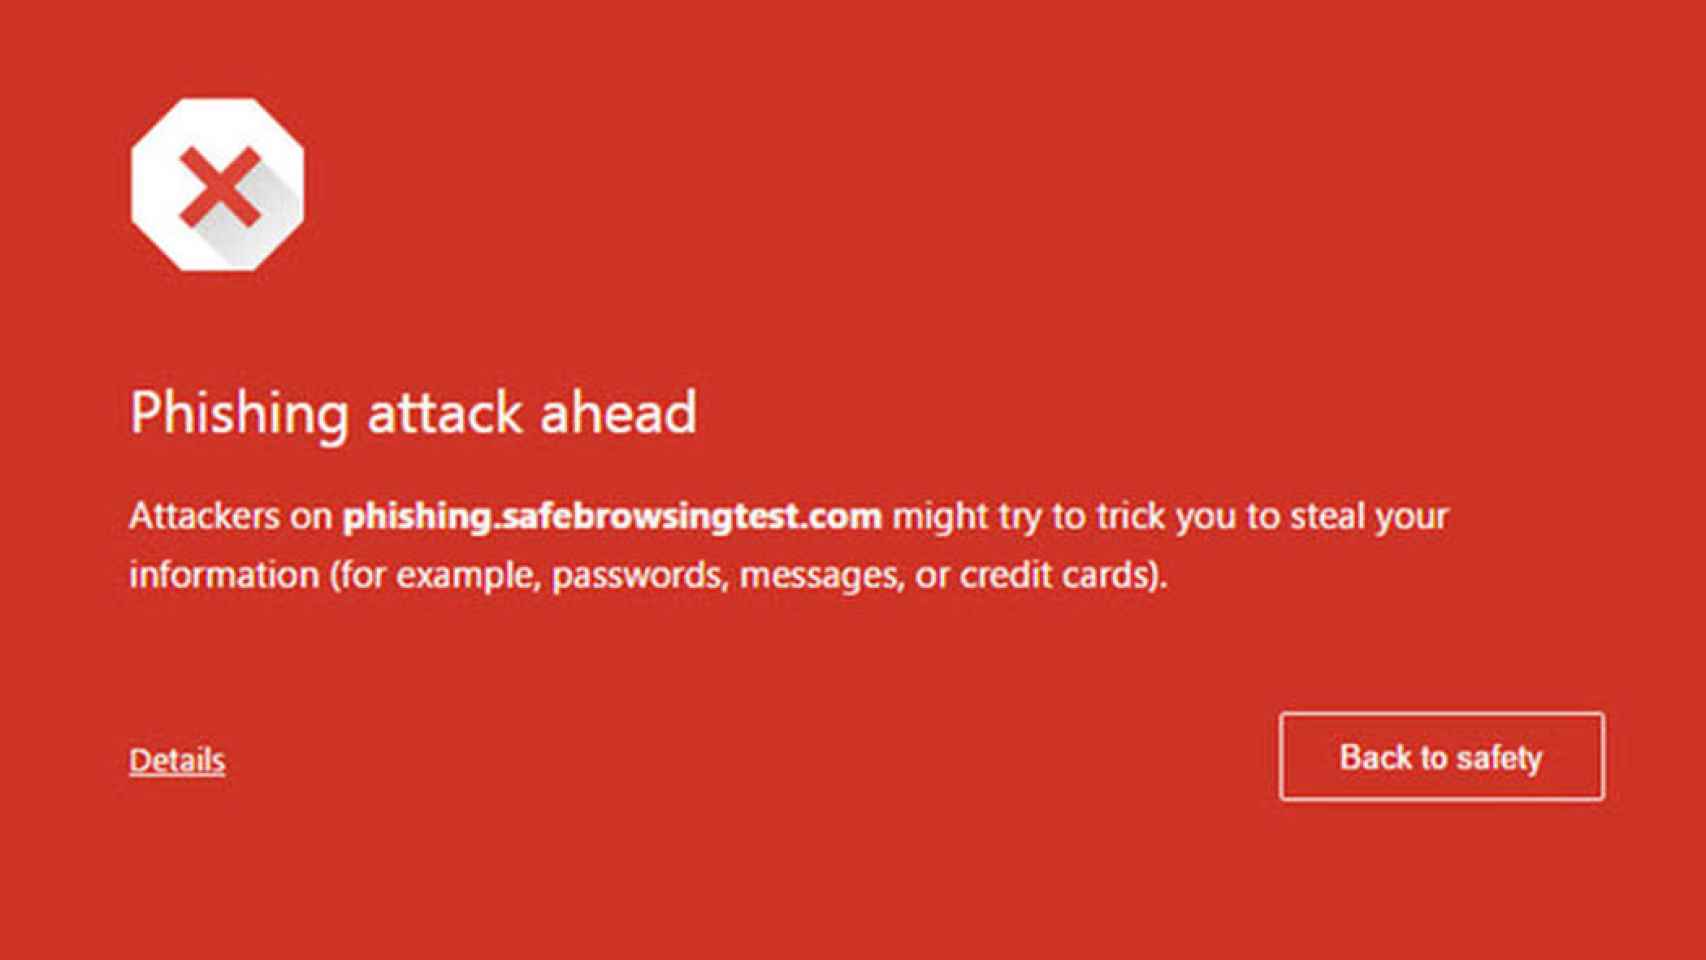 Advertencia de web phishing.